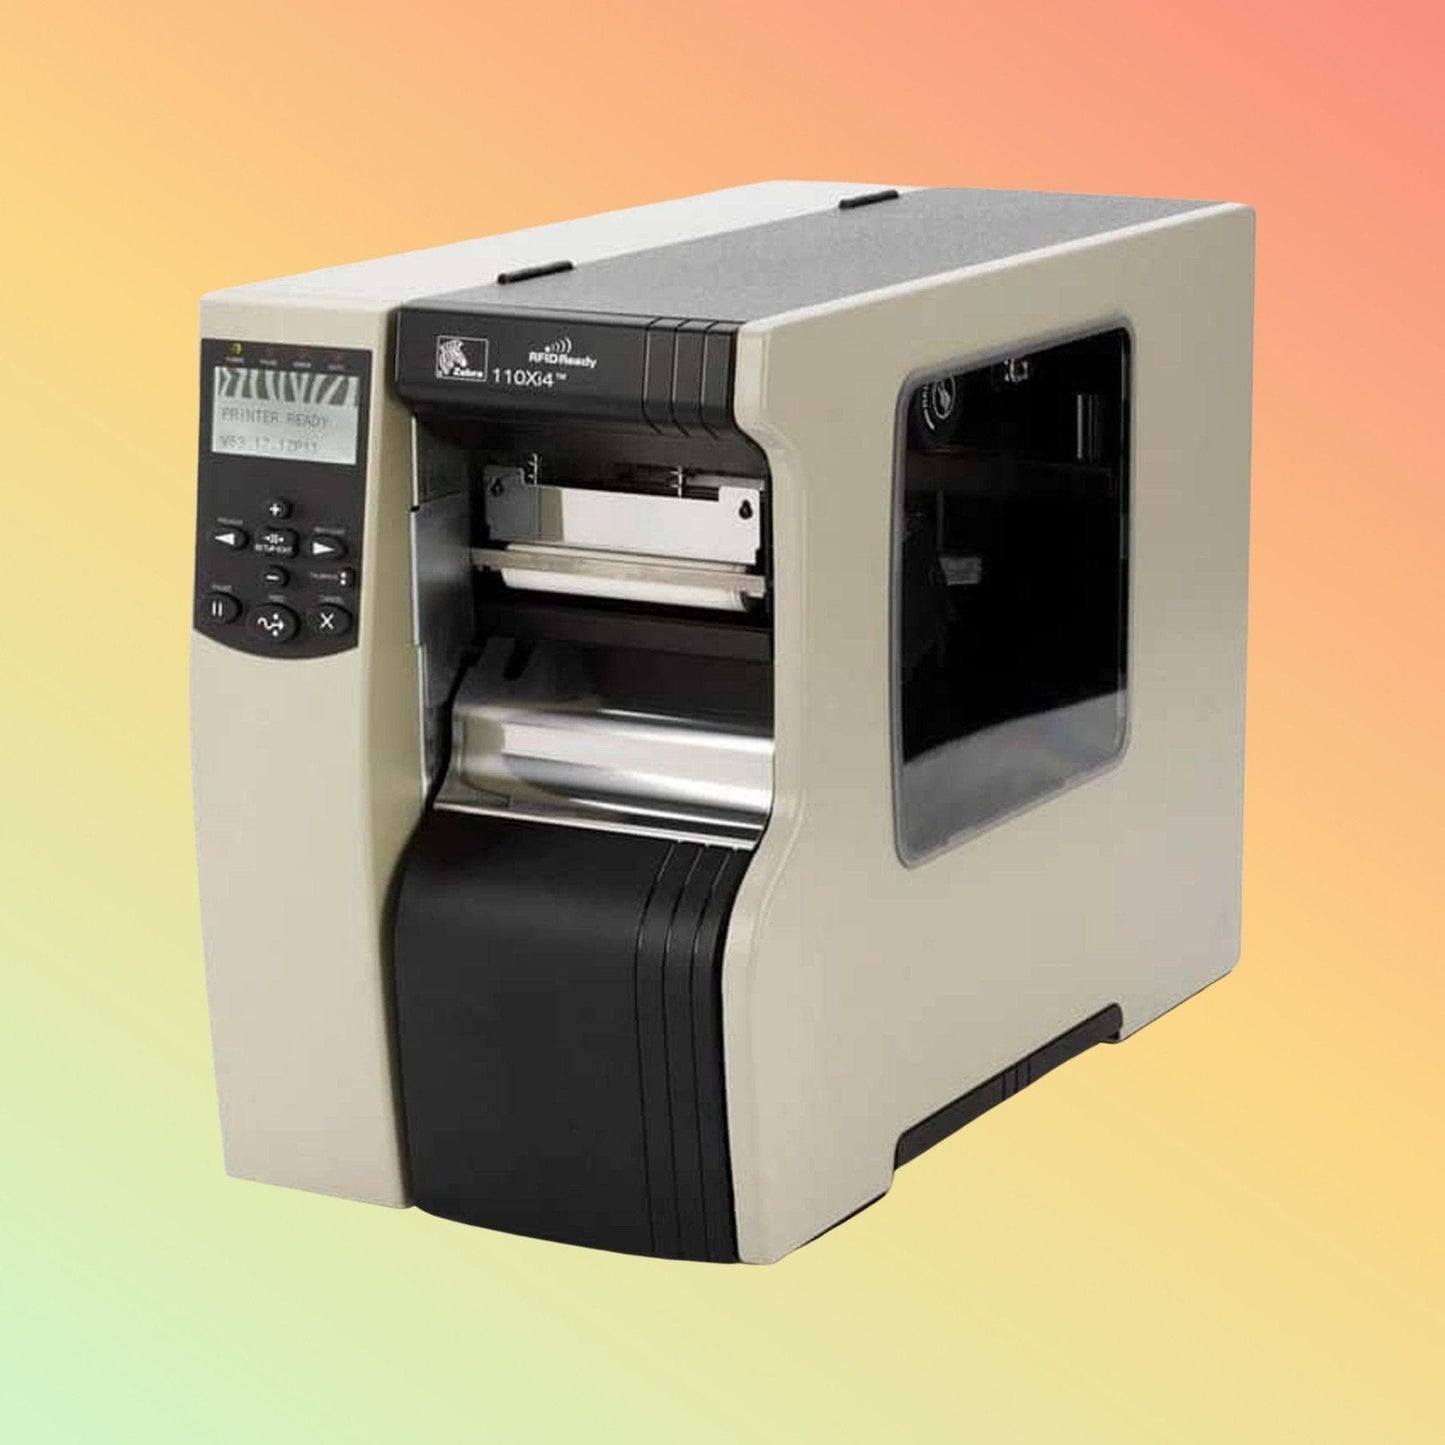 Barcode Printer - Zebra 110Xi4 - Neotech